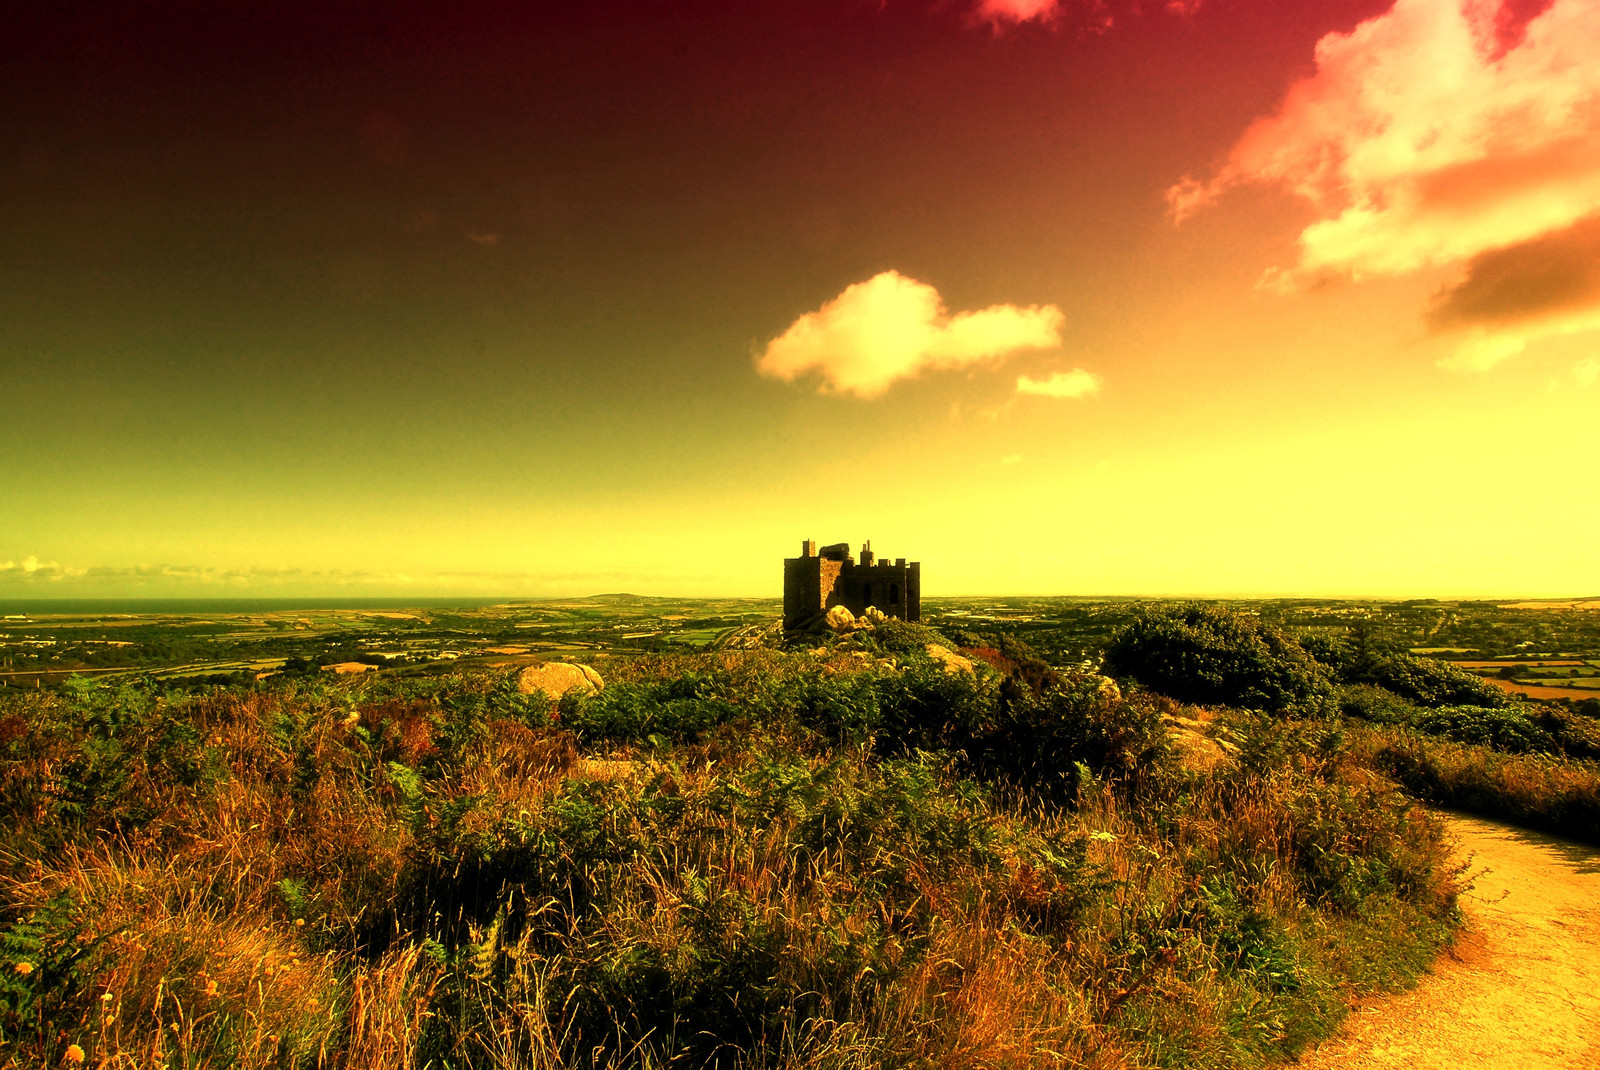 Carn Brea castle looking towards St Agnes